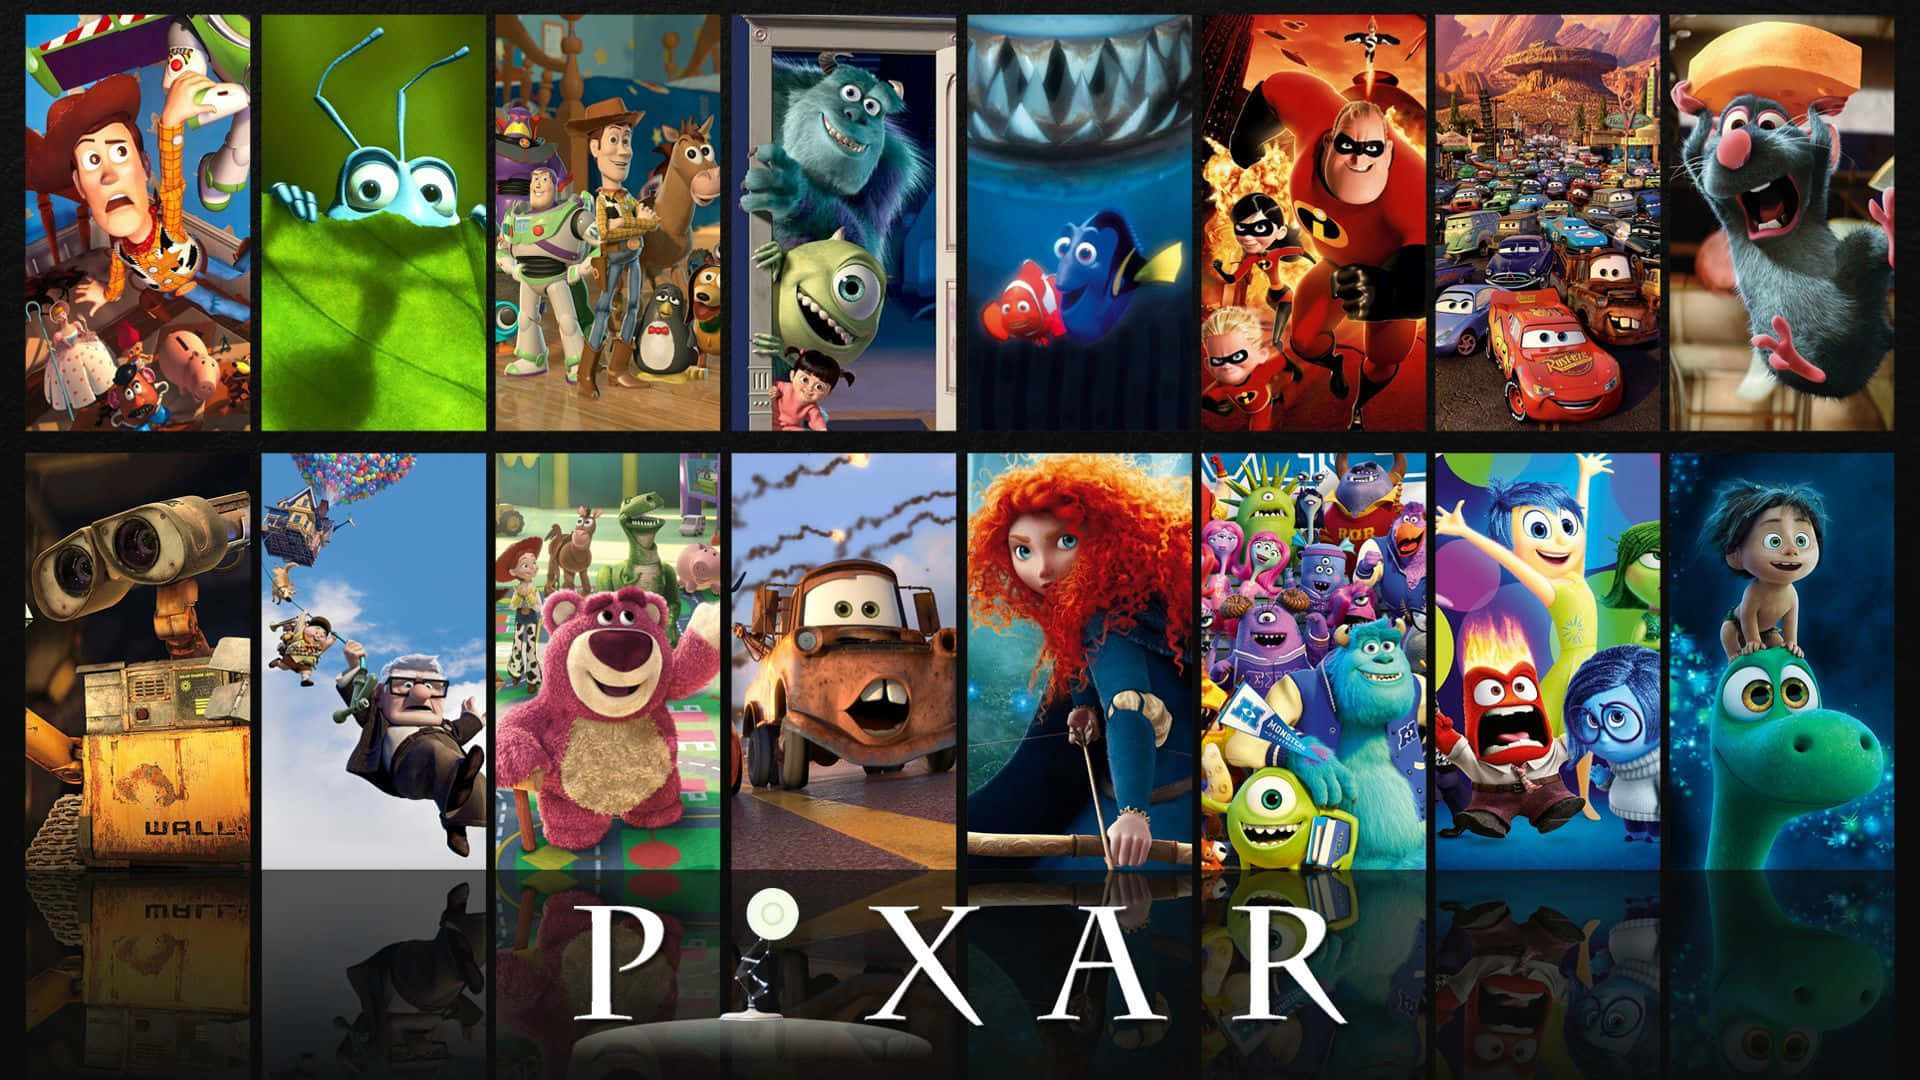 HD disney pixar characters wallpapers